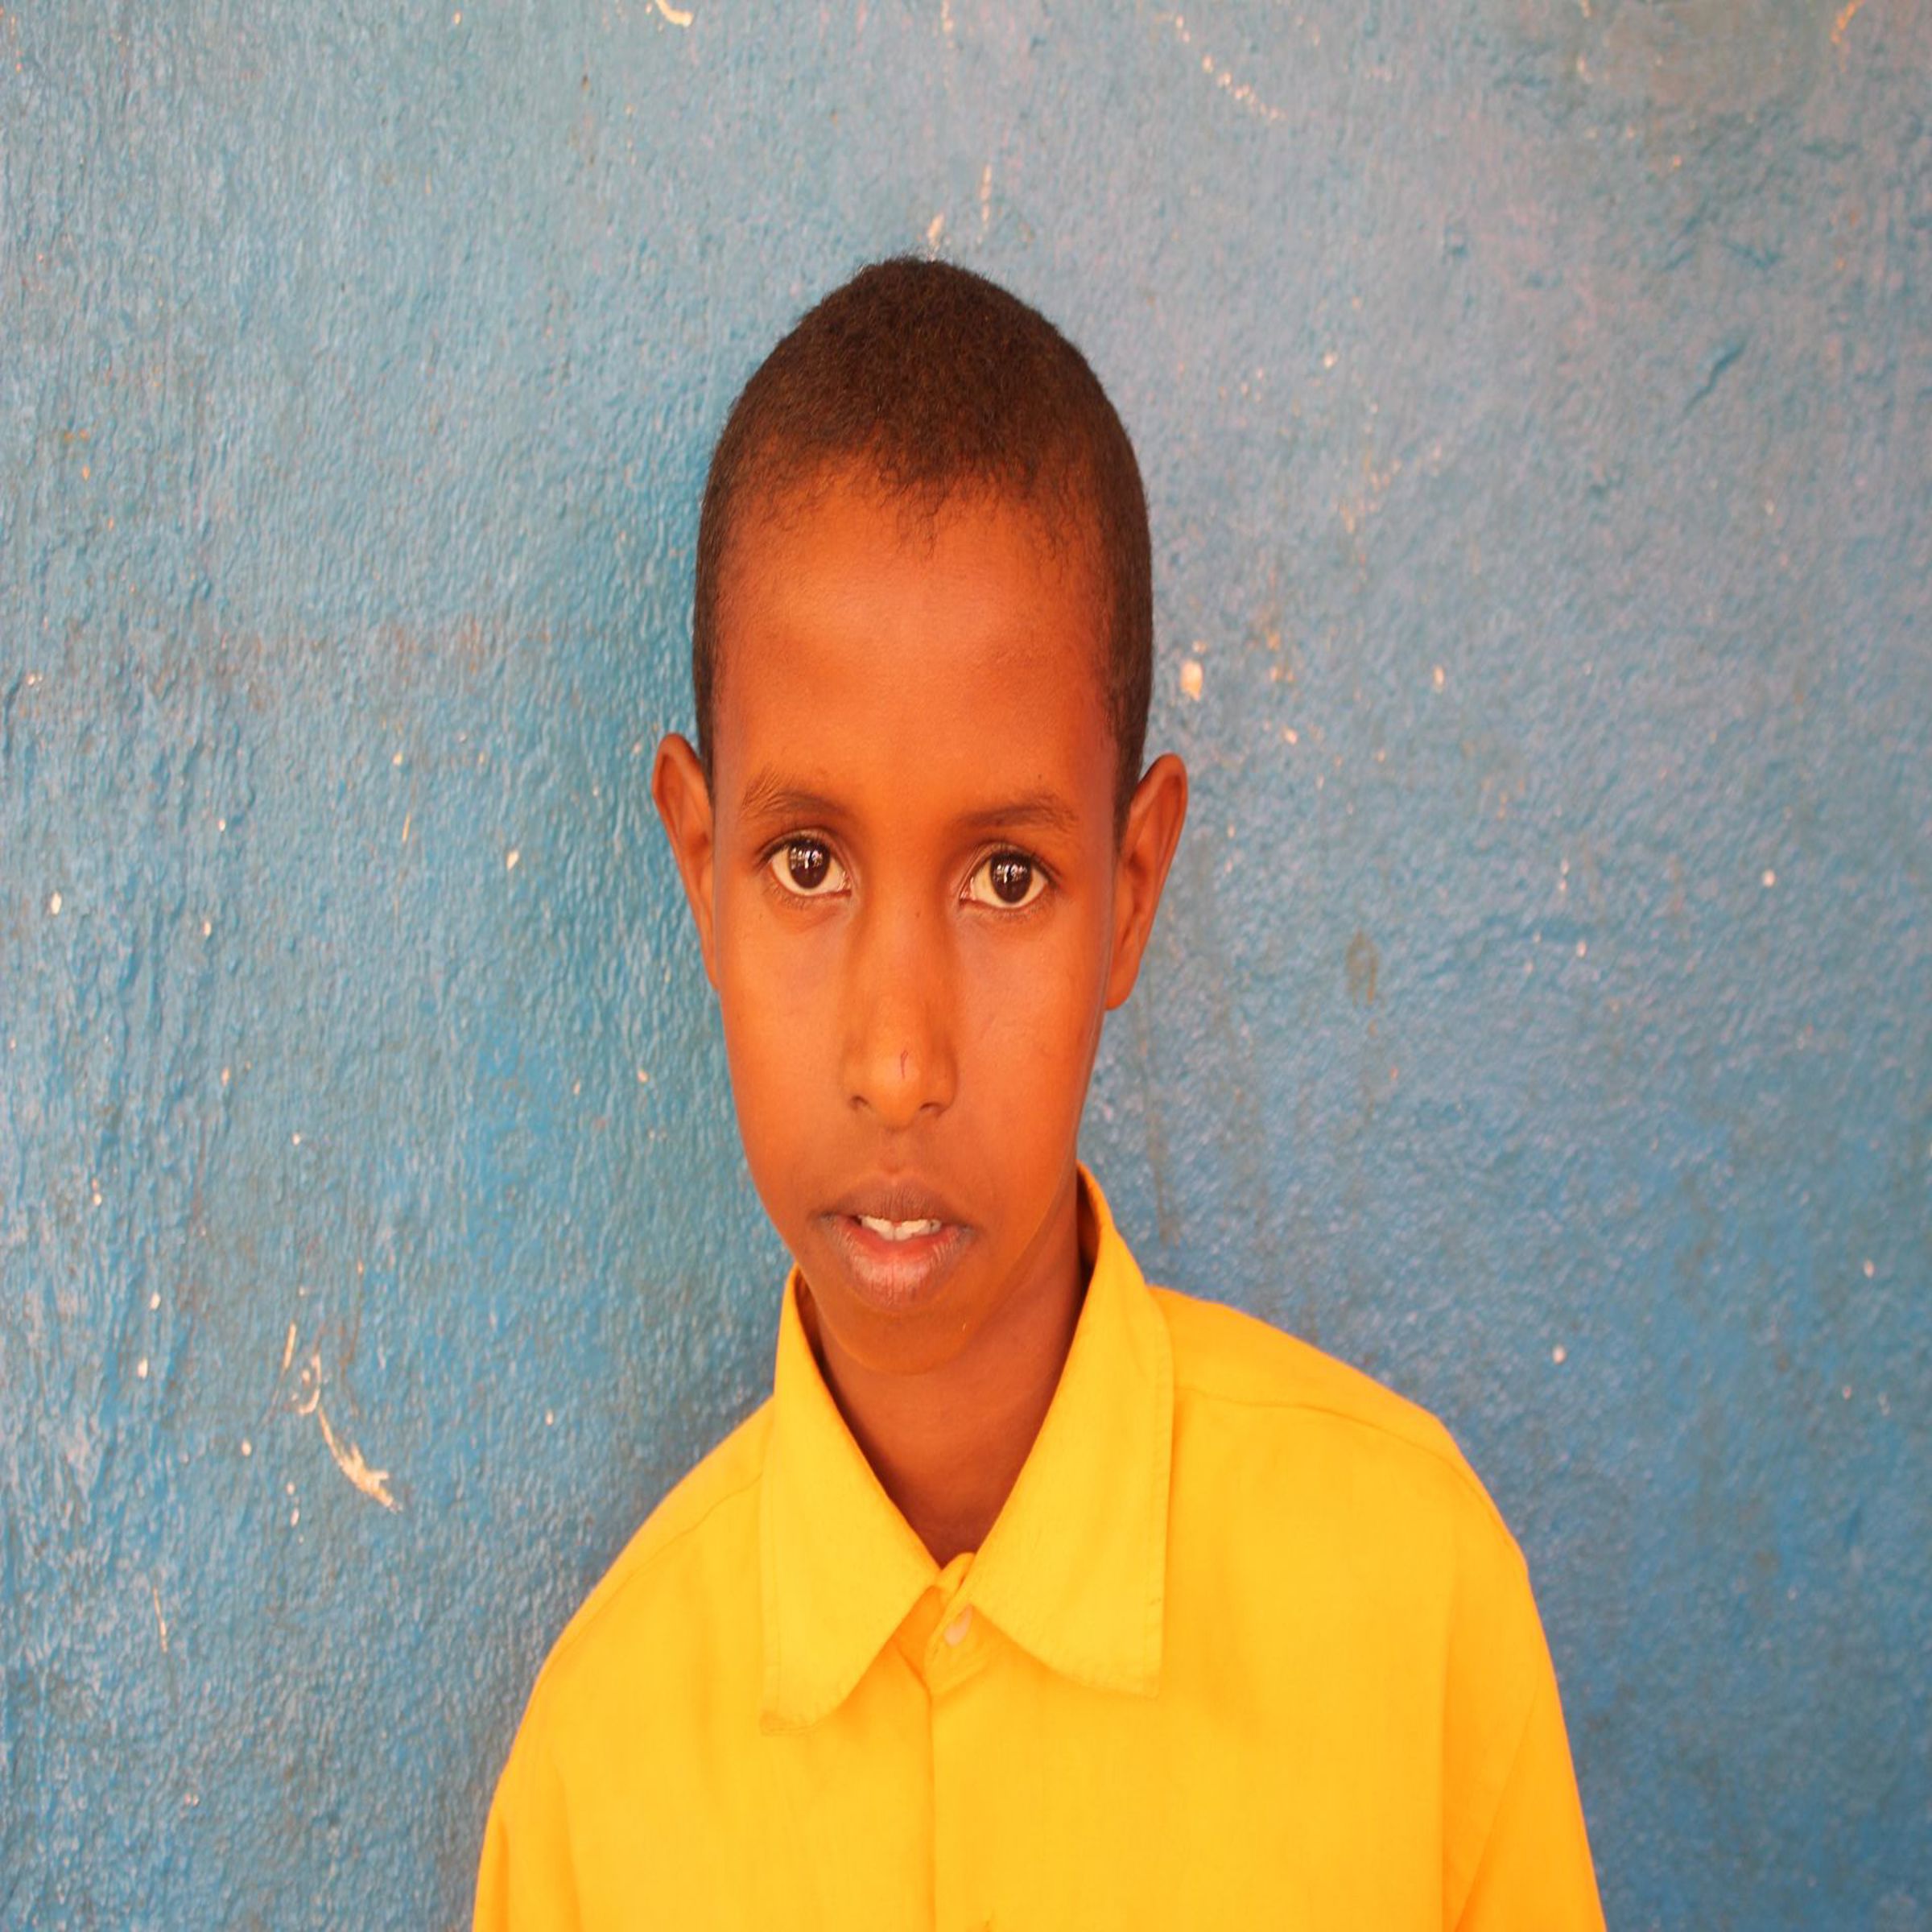 Human Appeal Orphan - Sharif Mohamed